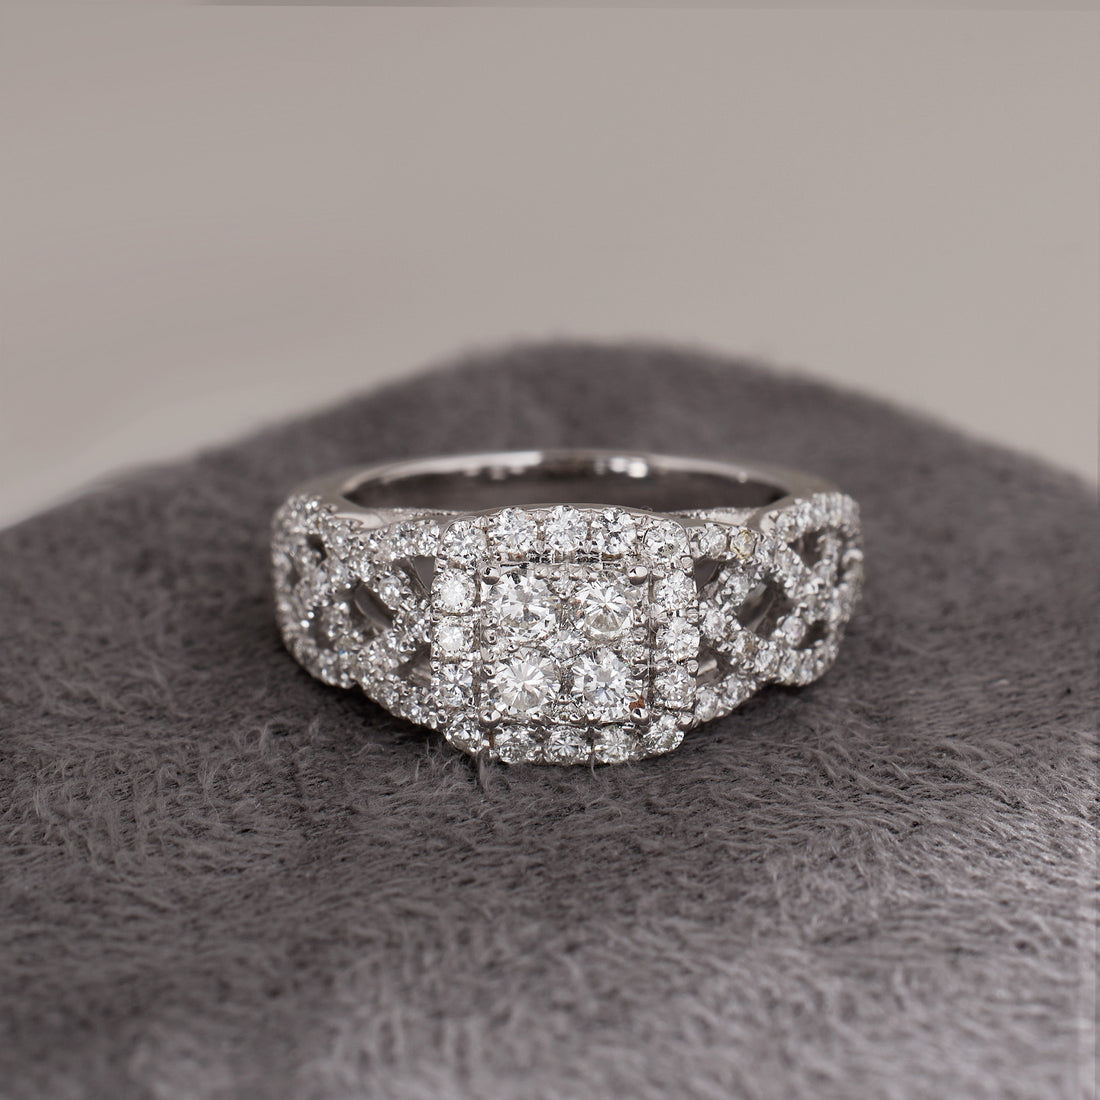 Vintage-Styled Diamond Engagement Ring